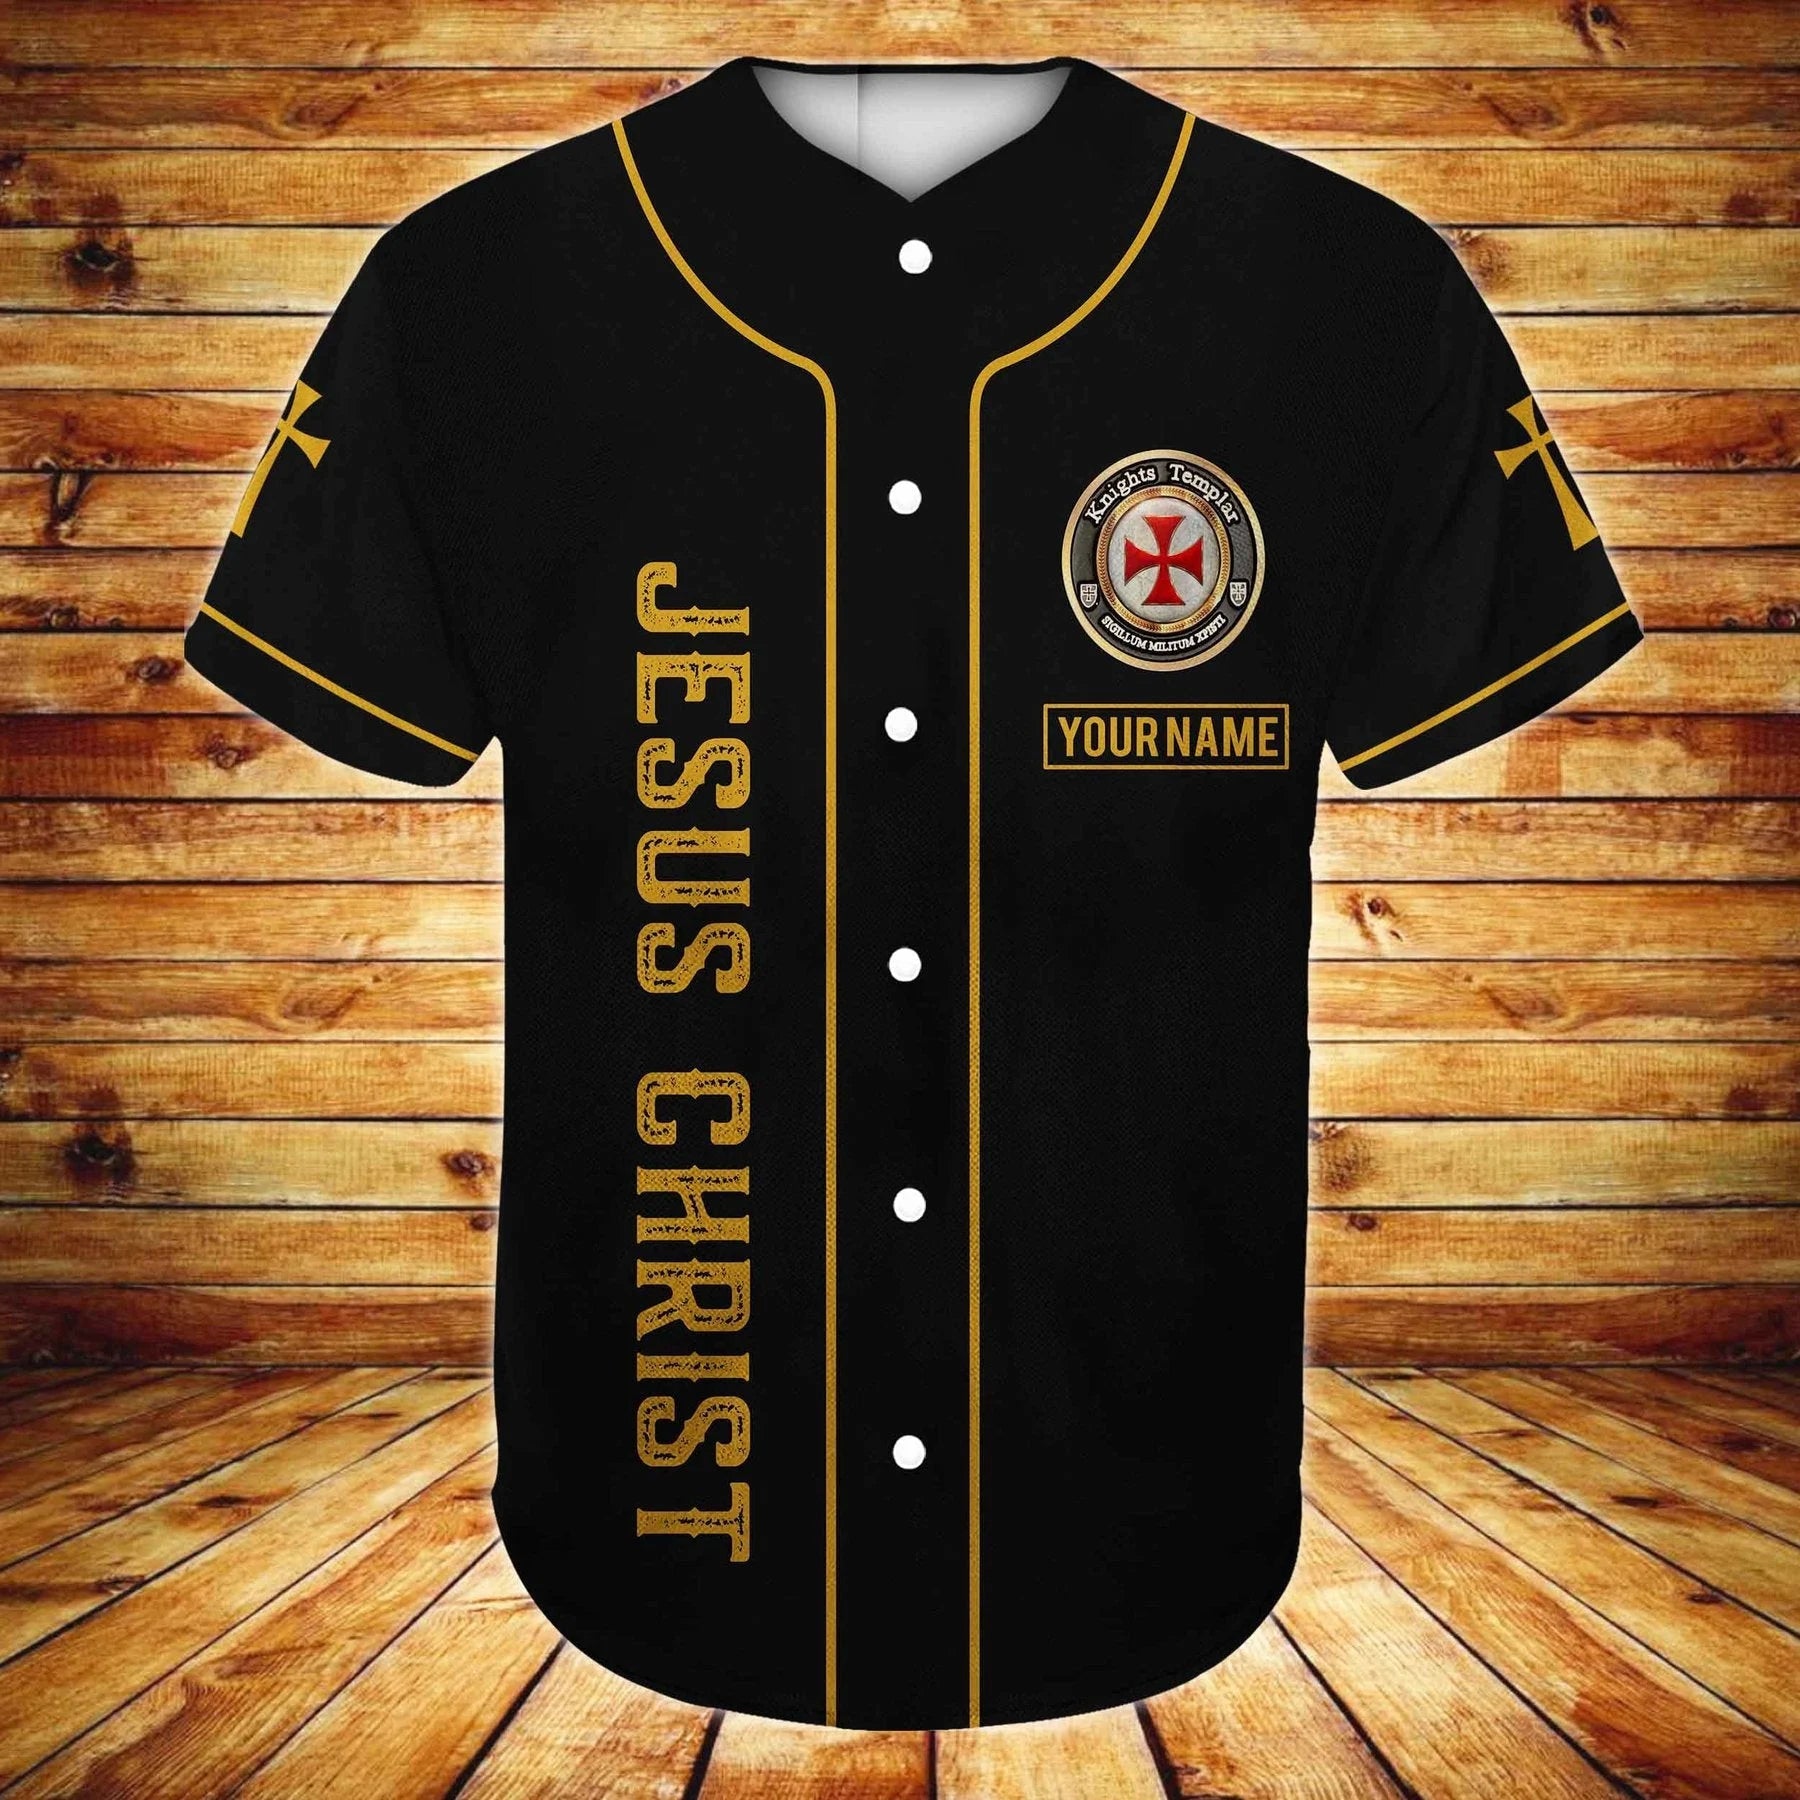 Cross, Lion Baseball Jersey - My God's not dead Custom Baseball Jersey Shirt For Men Women